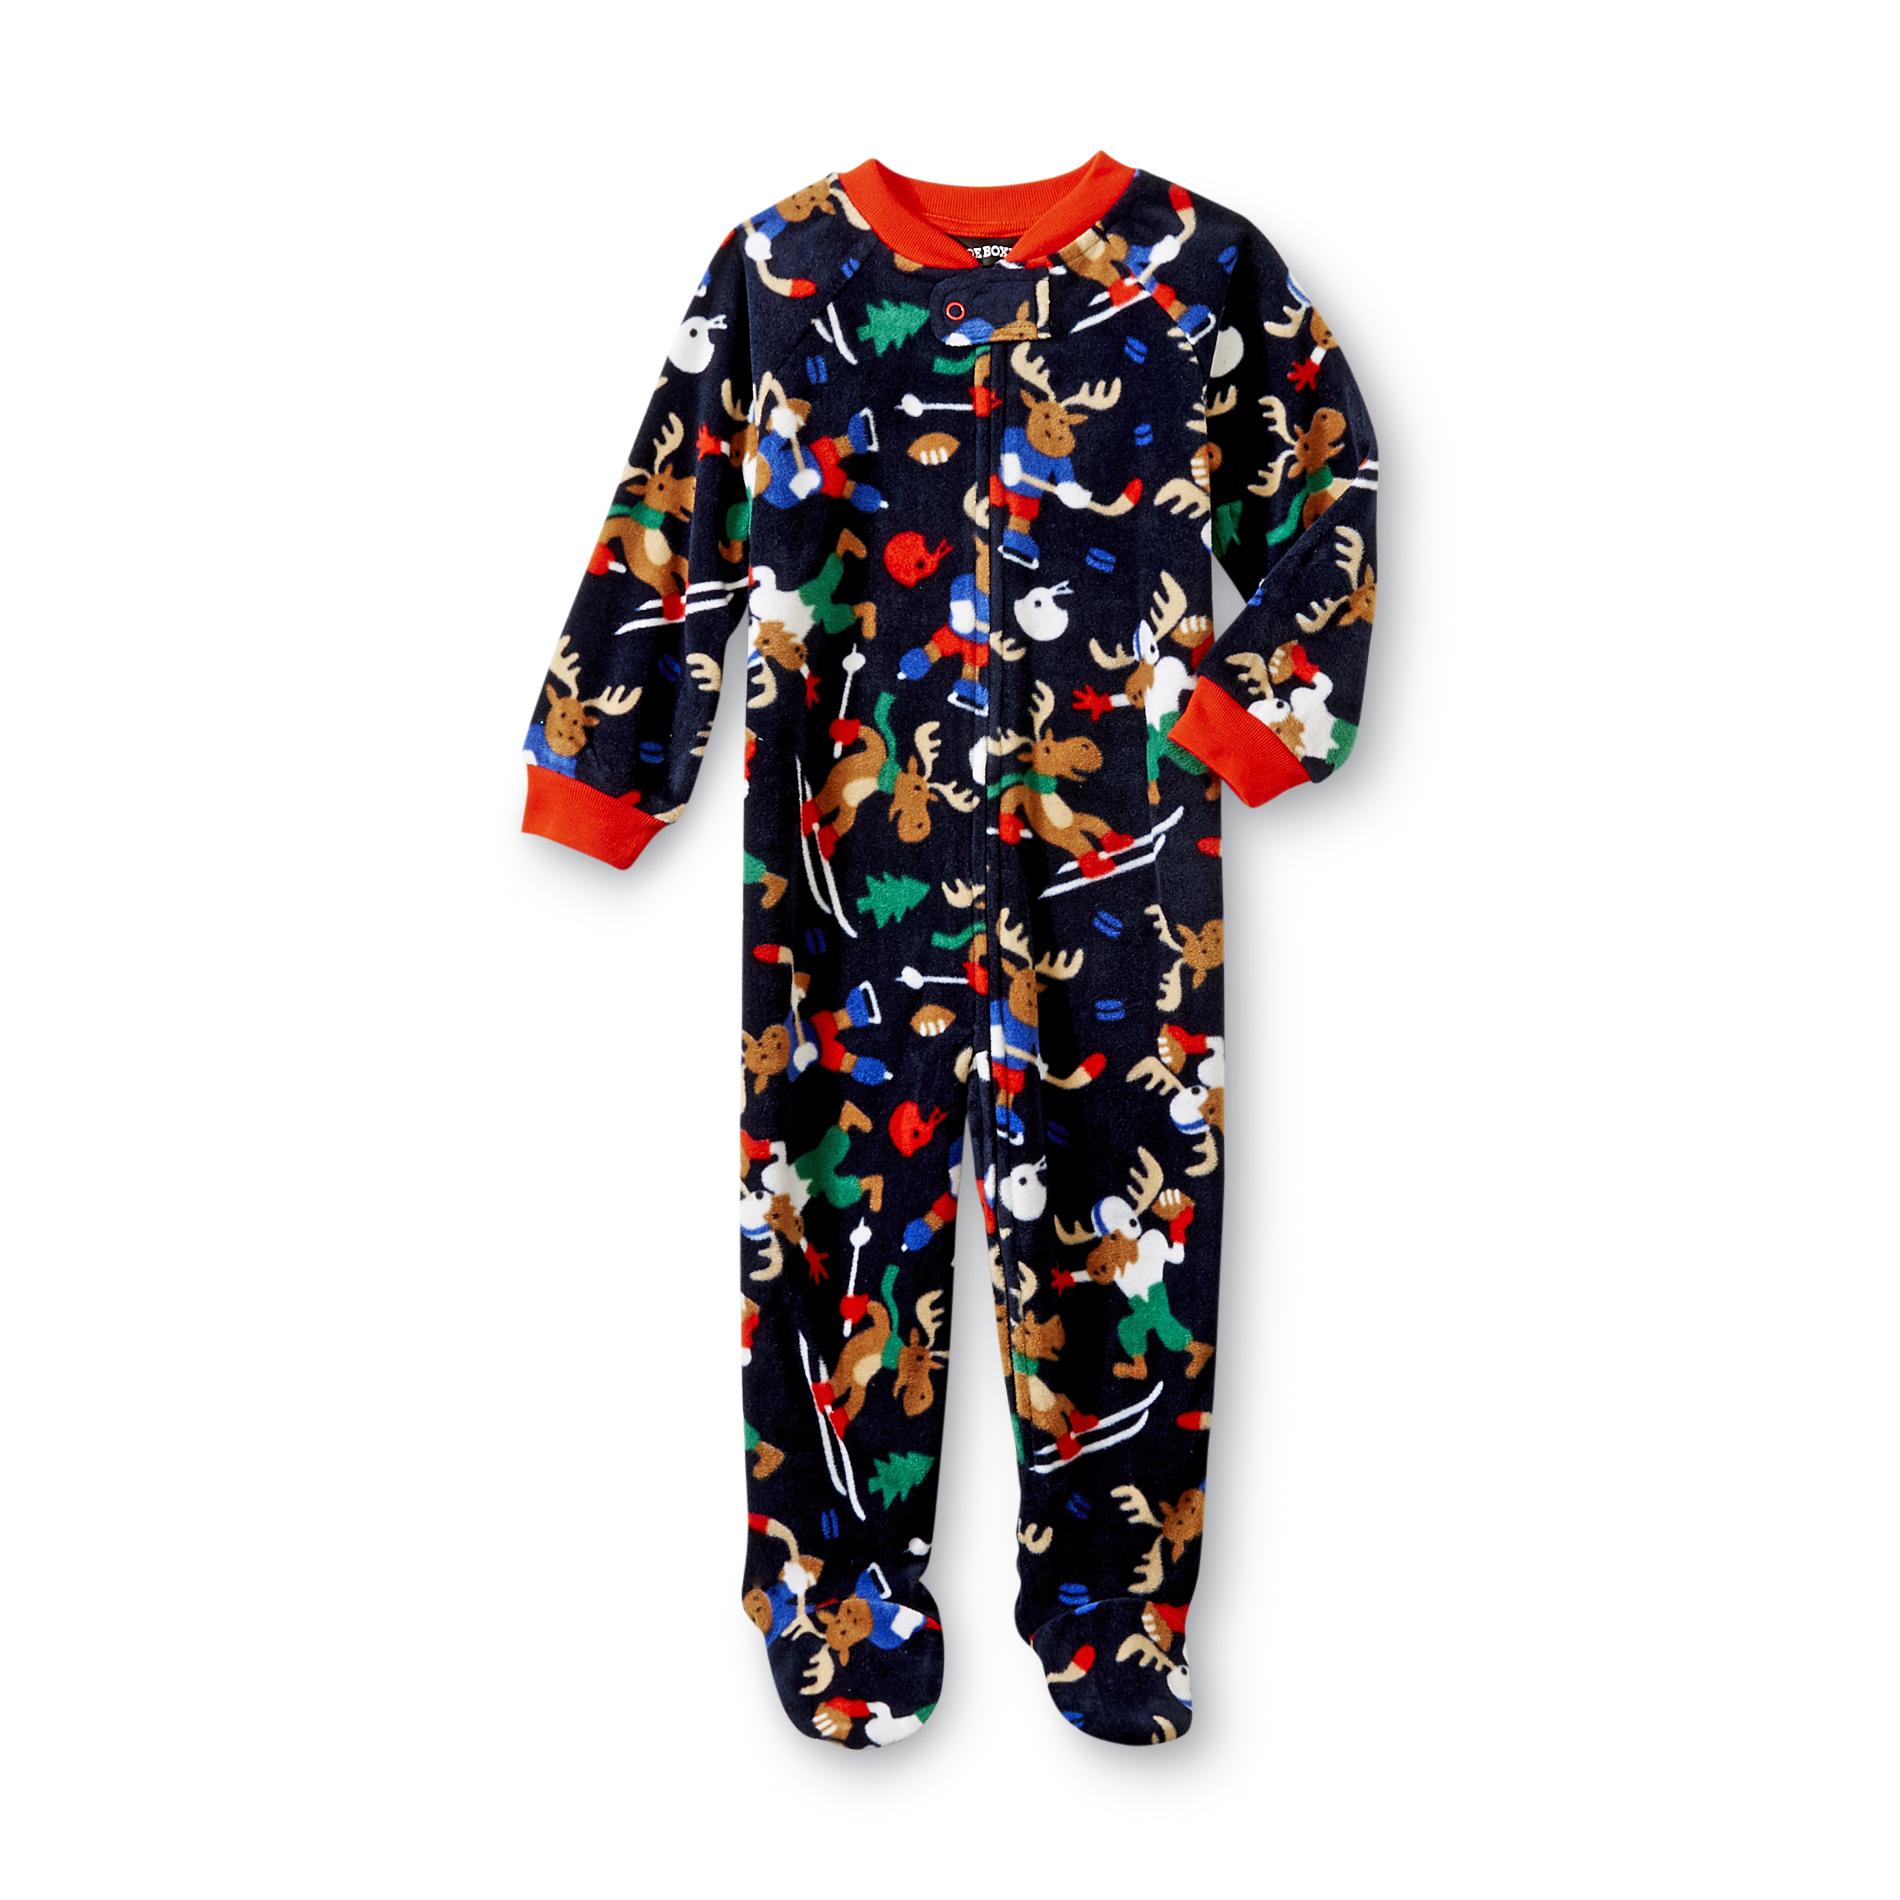 Joe Boxer Infant & Toddler Boy's Fleece Sleeper Pajamas - Sports Moose